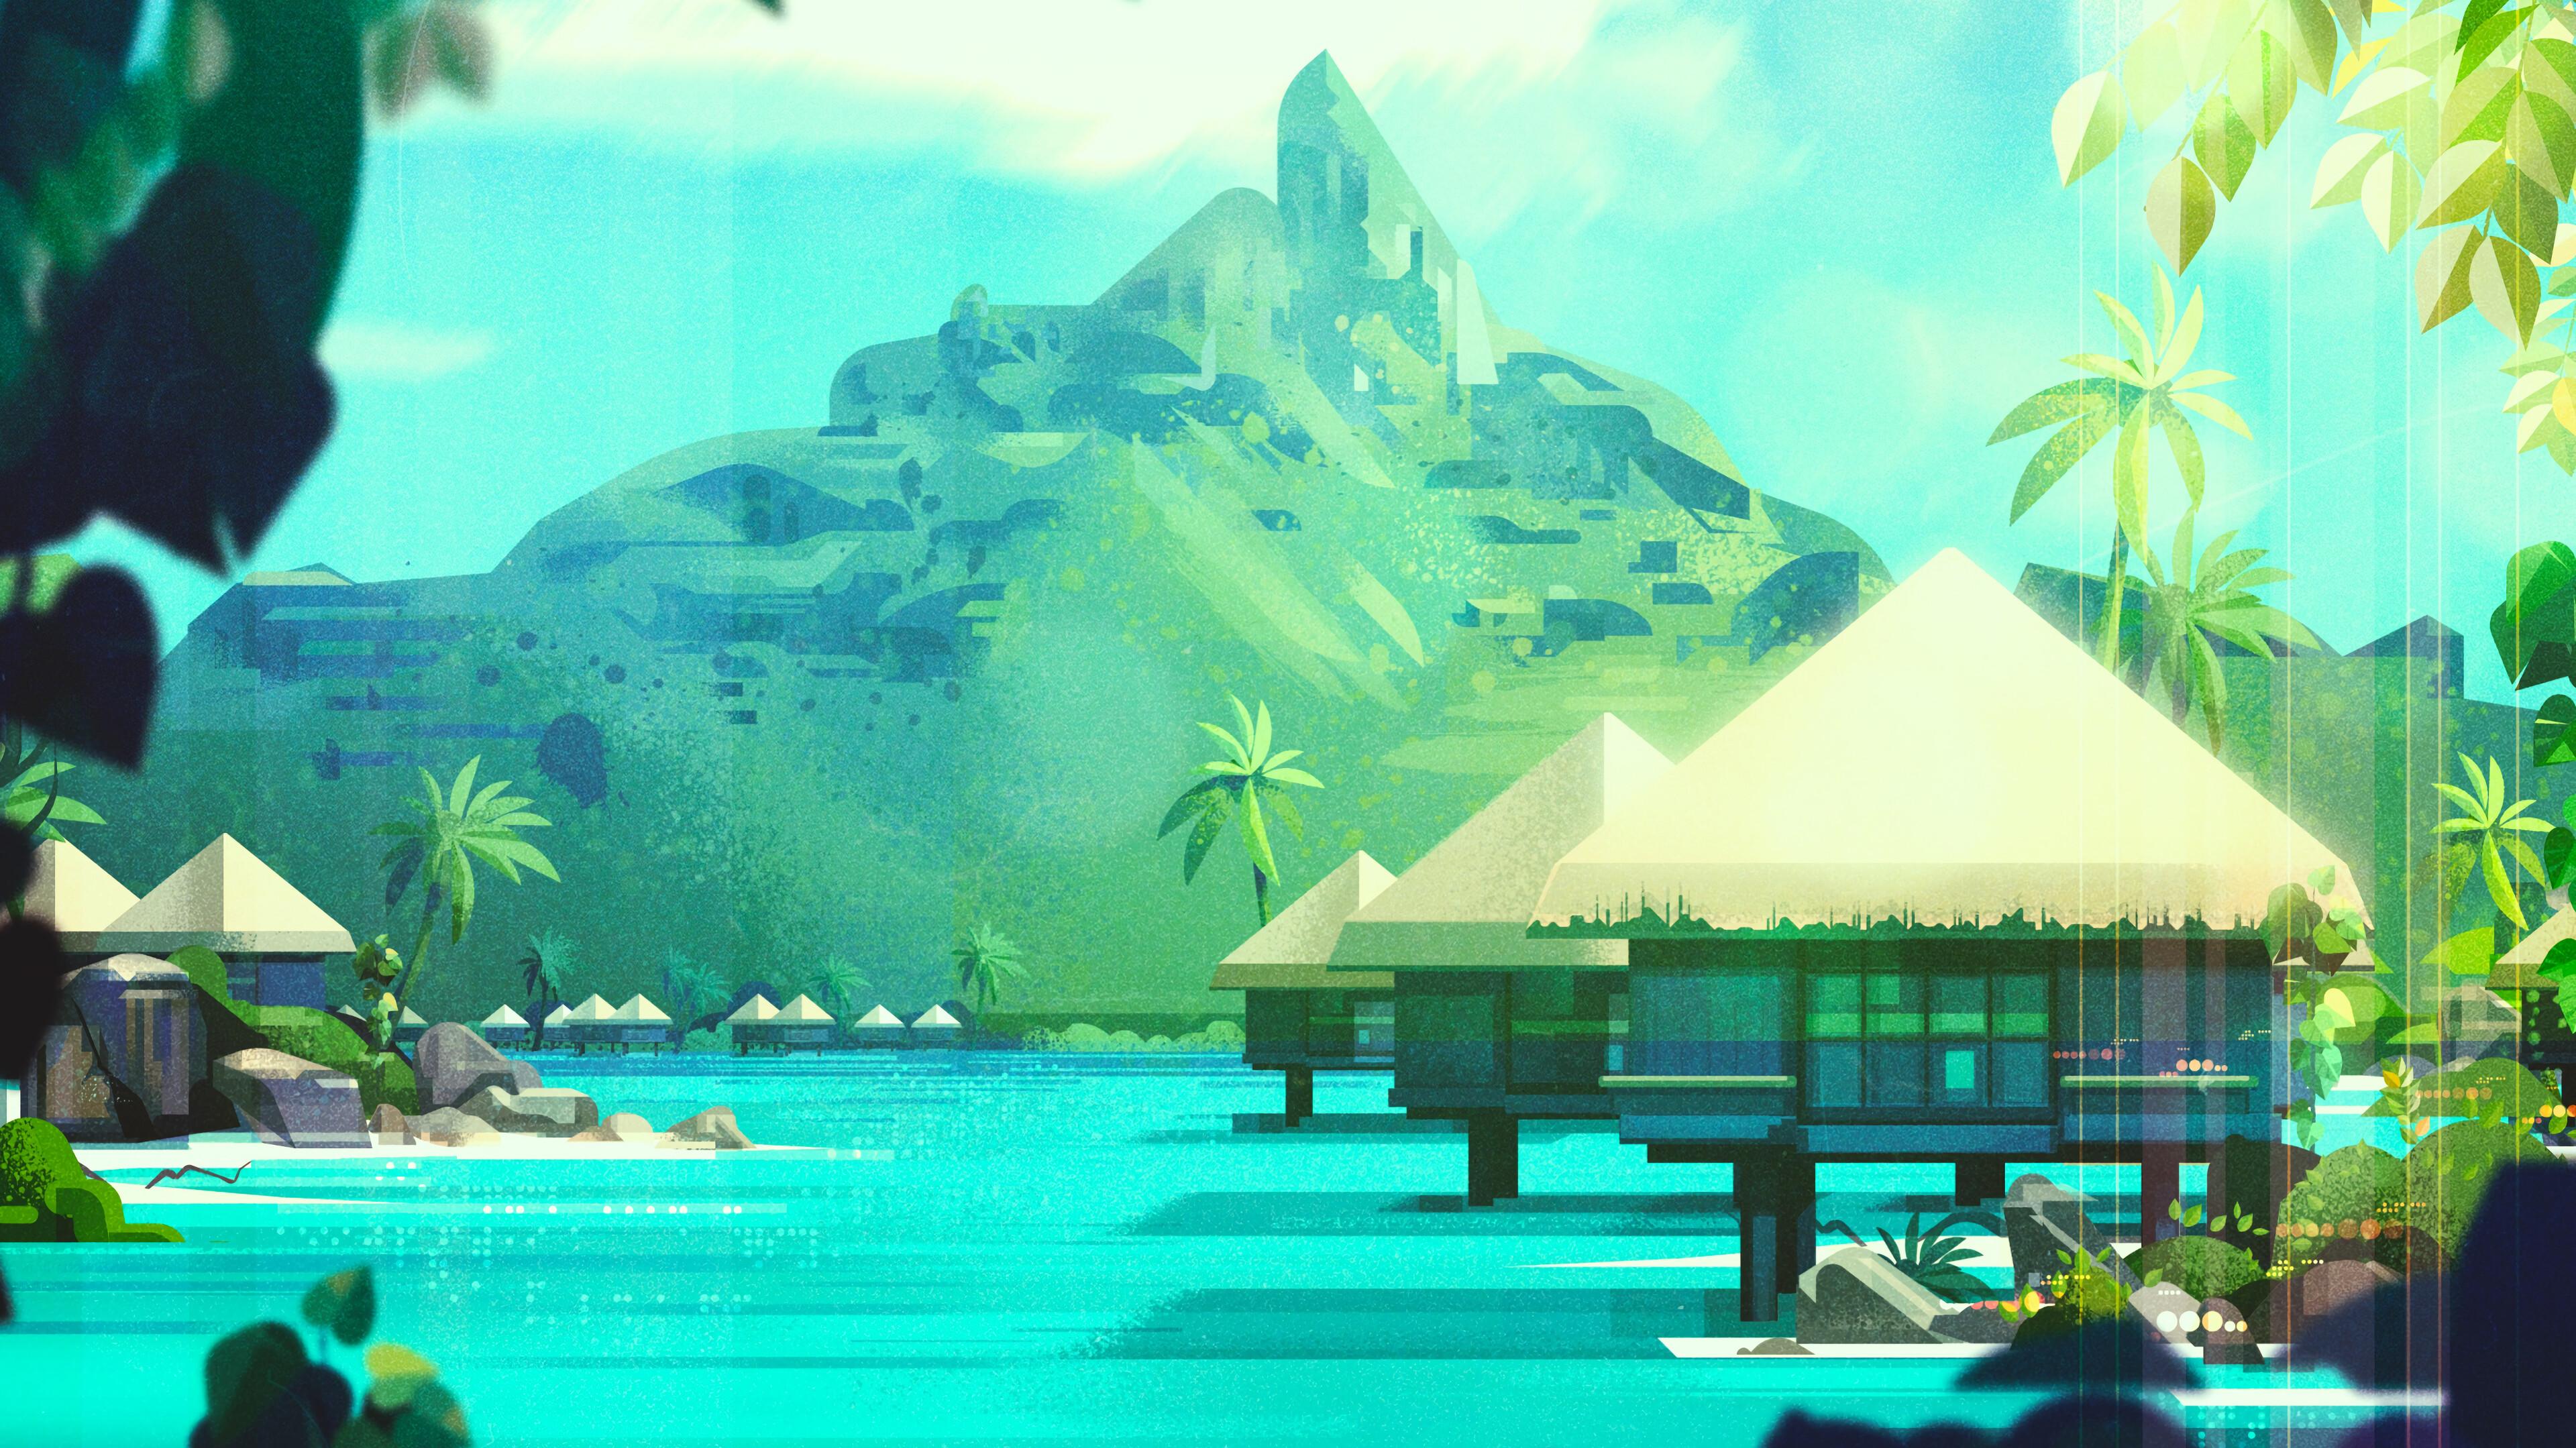 Island Scenery Digital Art Illustration 4k Wallpaper